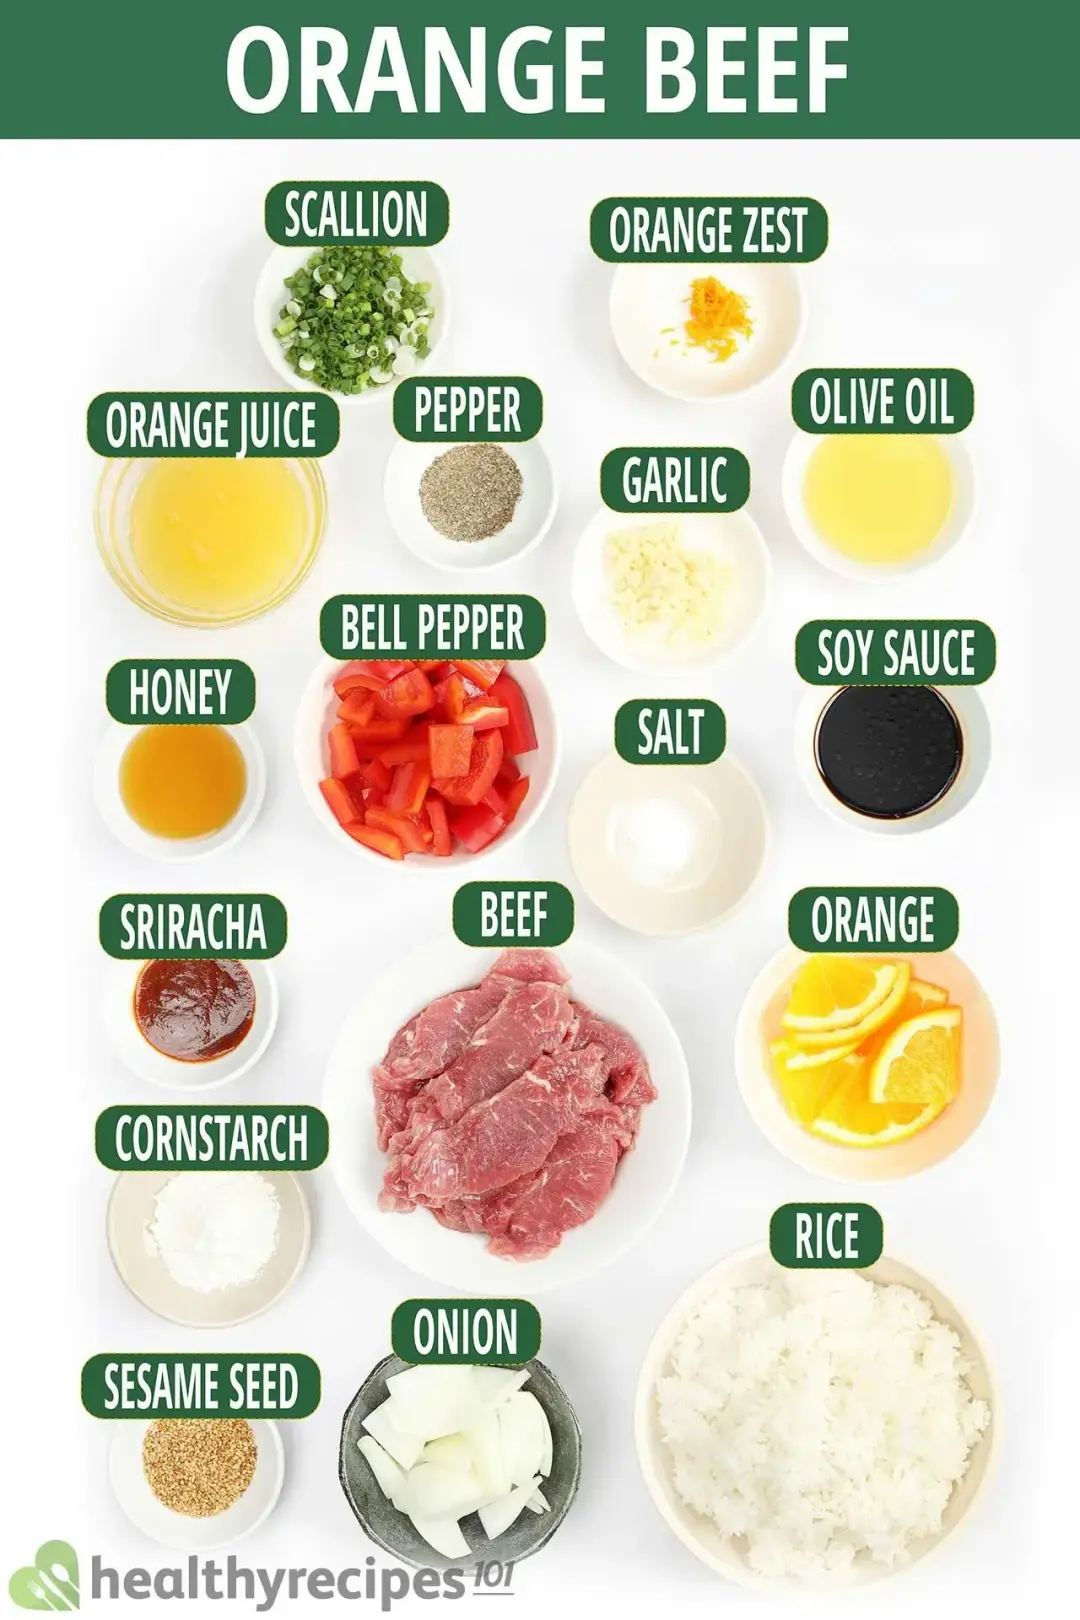 Ingredients for Orange Beef